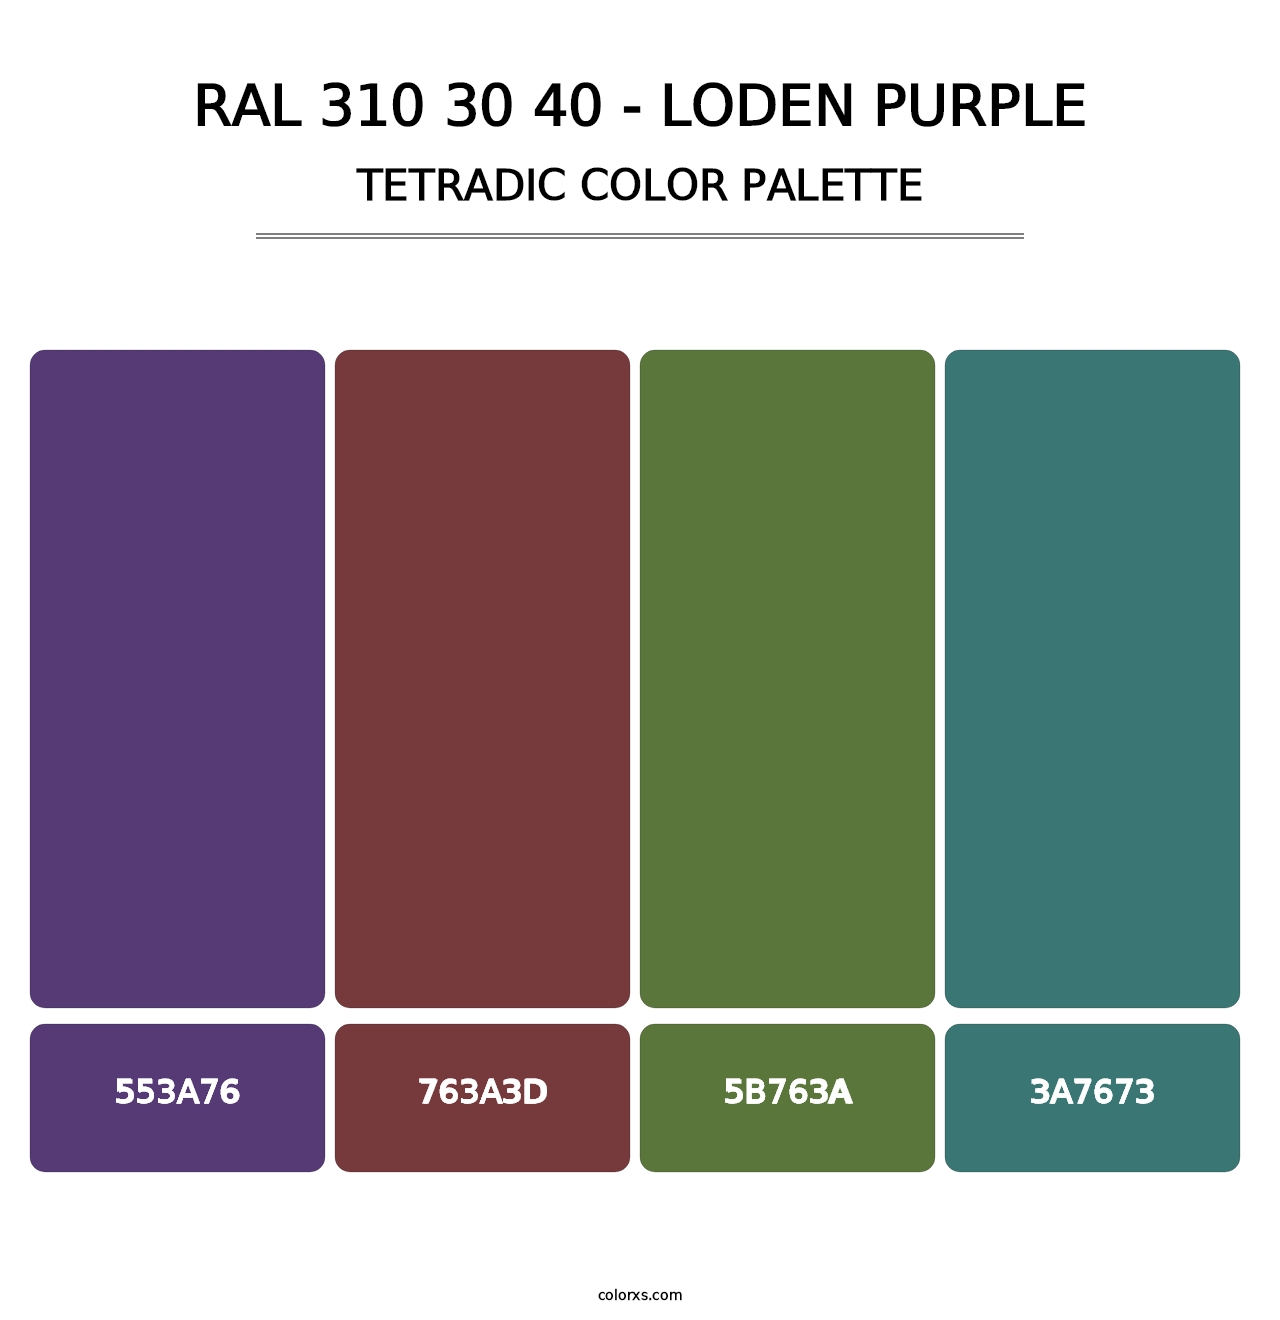 RAL 310 30 40 - Loden Purple - Tetradic Color Palette